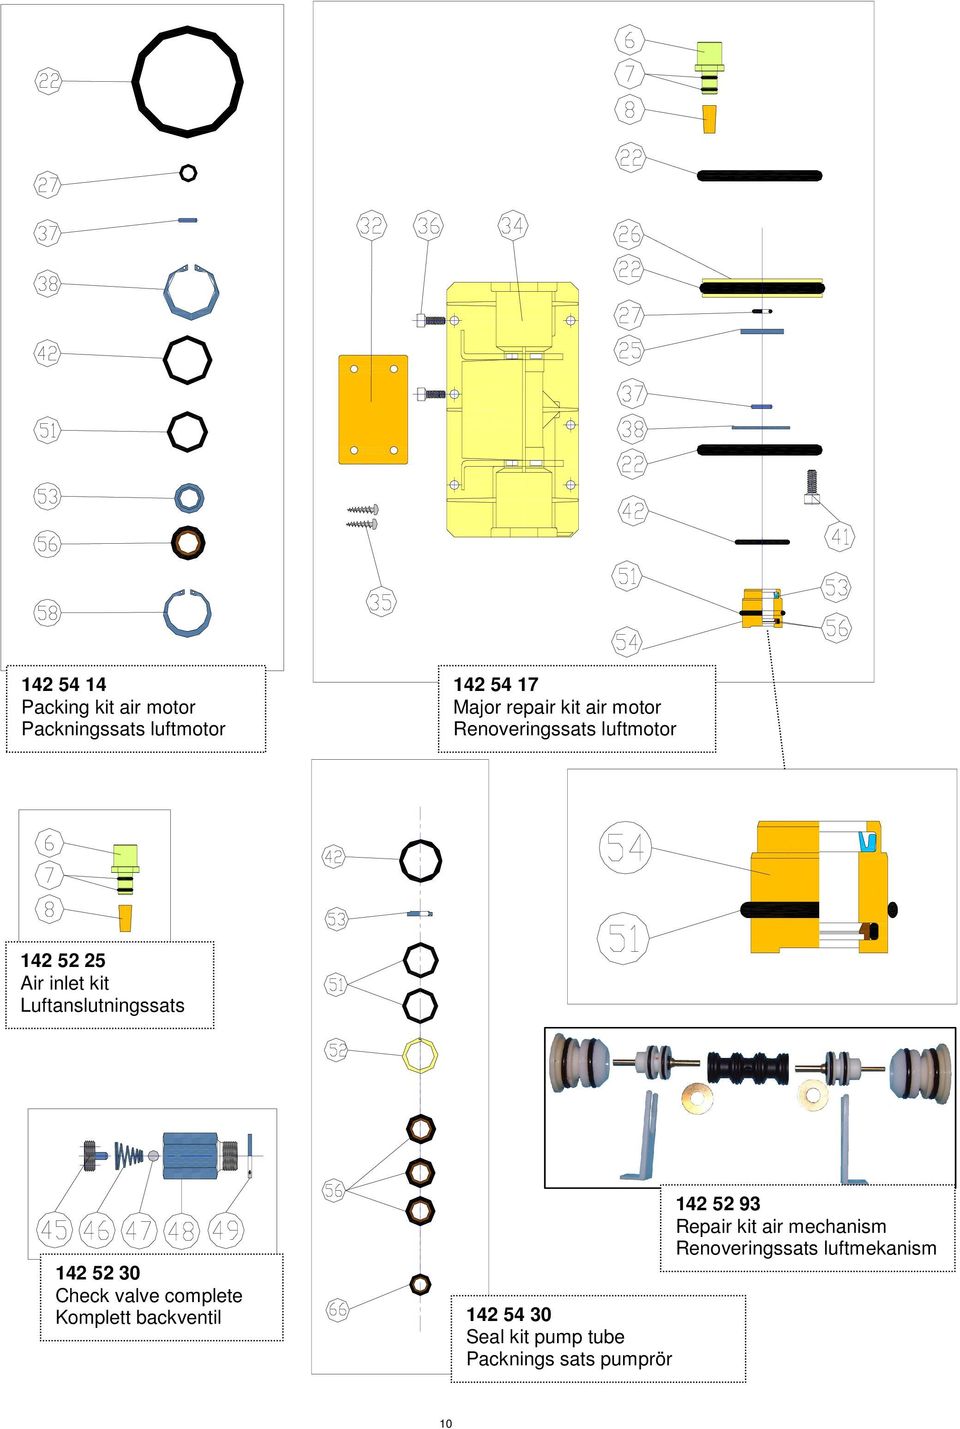 5 93 Repair kit air mechanism Renoveringssats luftmekanism 4 5 30 Check valve